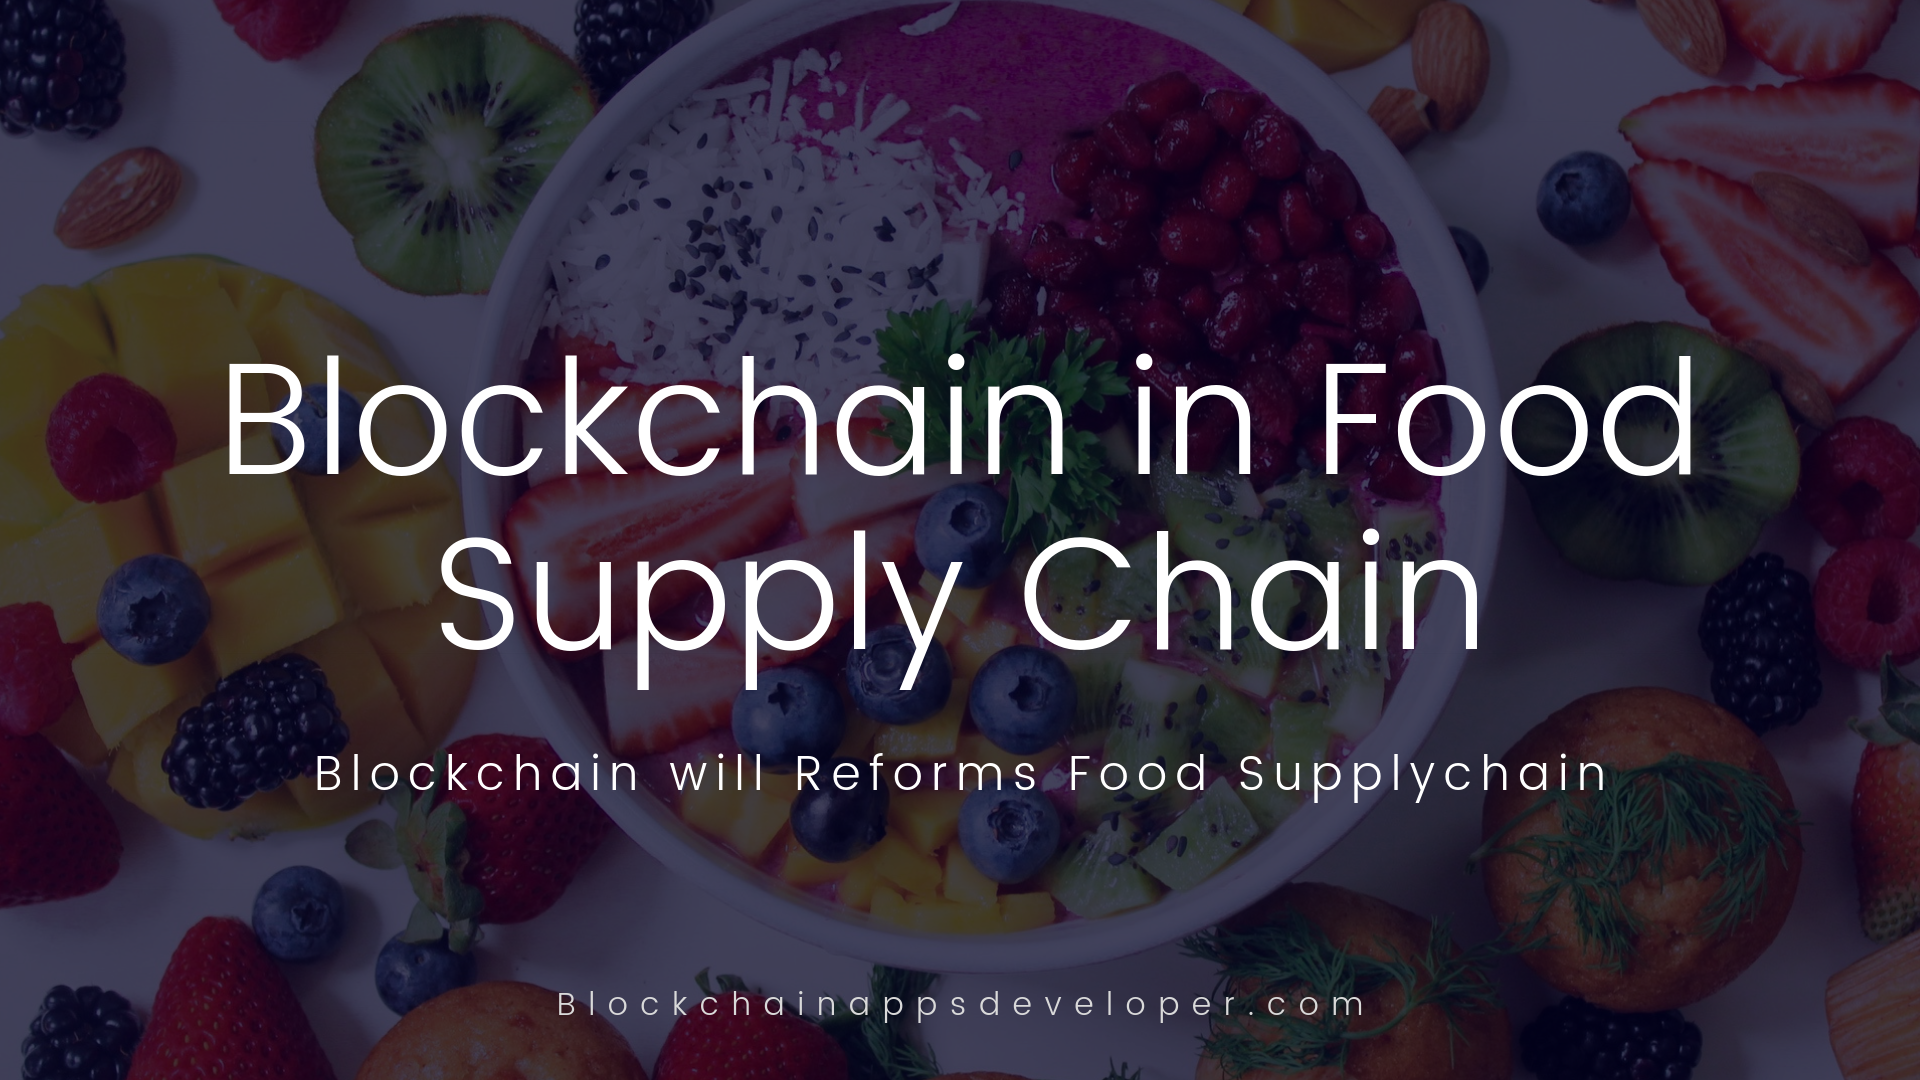 How Blockchain Reform Food Supply Chain?